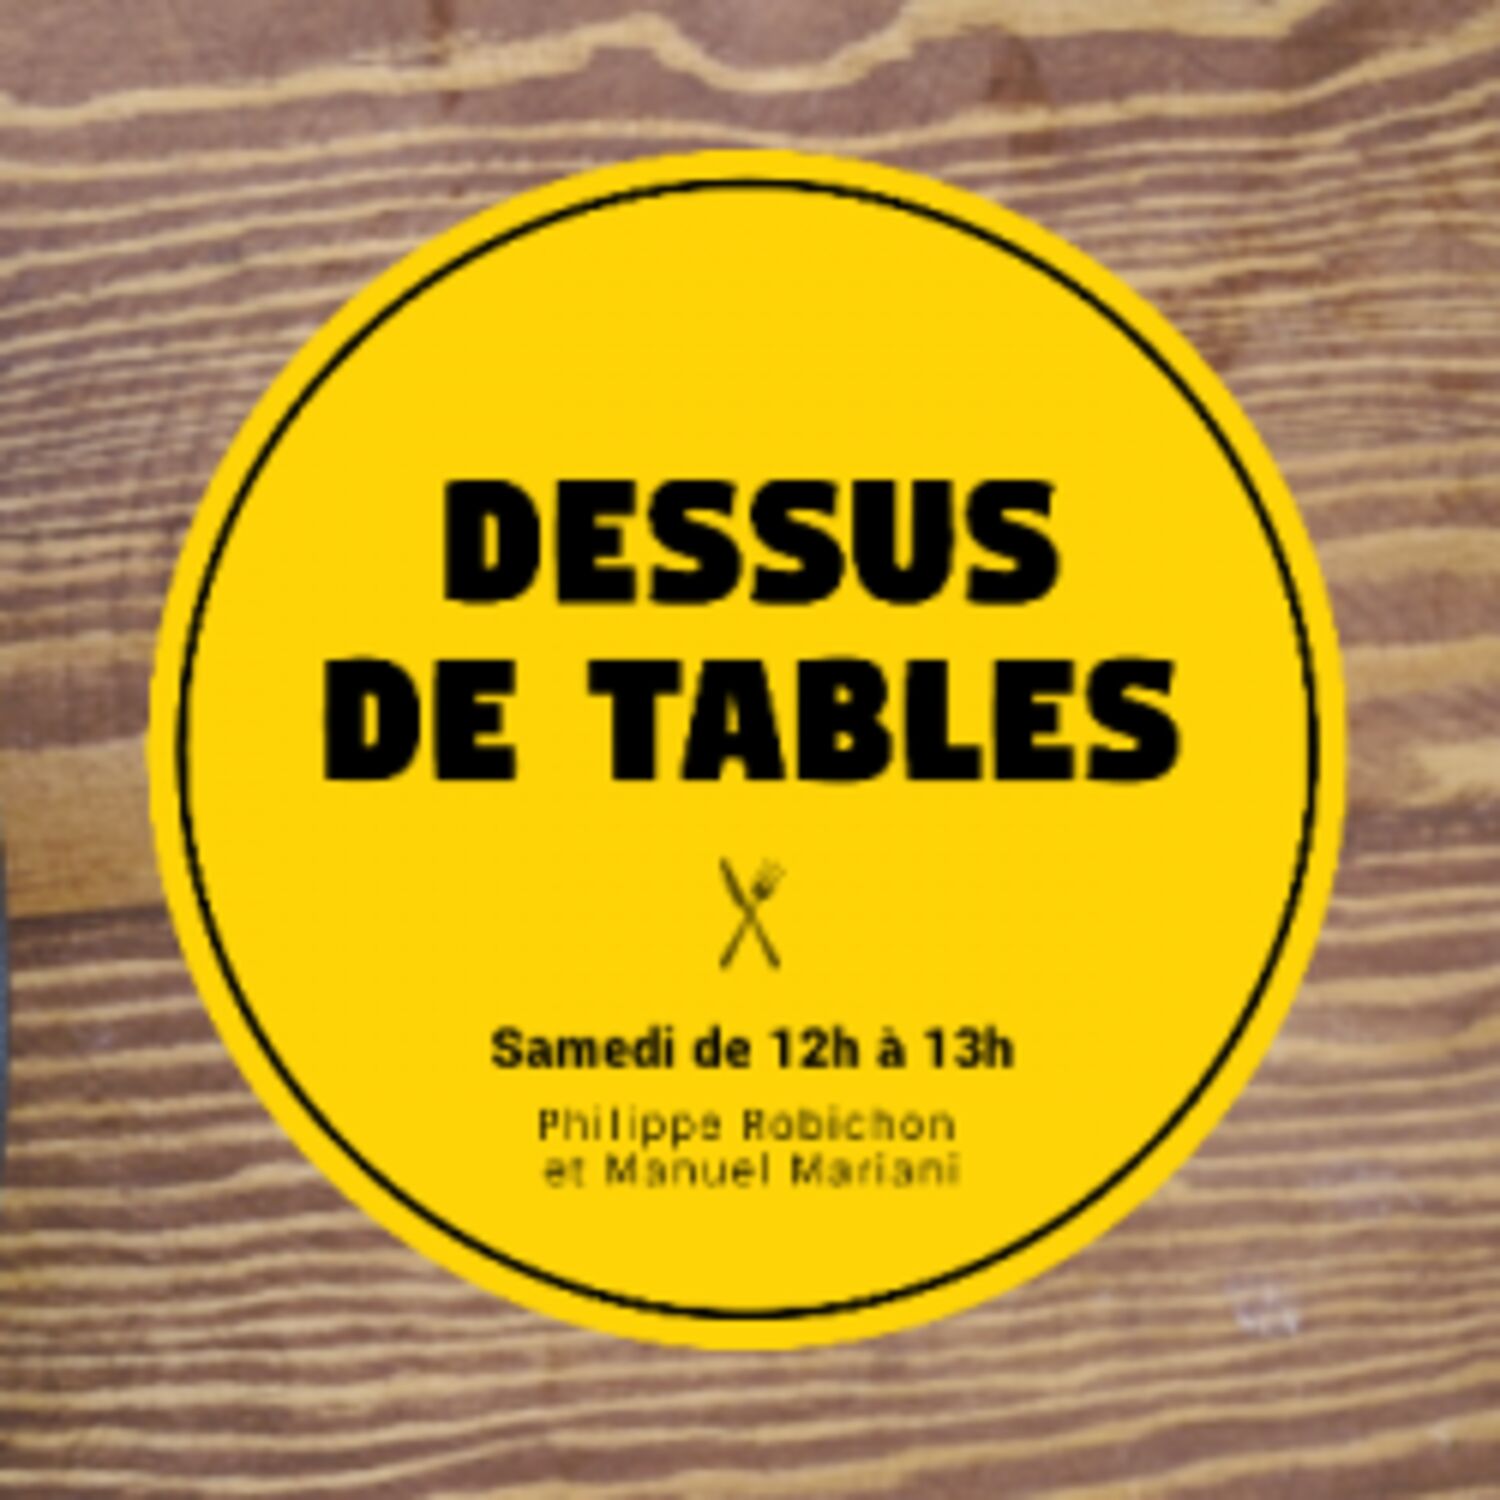 Dessus de tables 09-01-2021